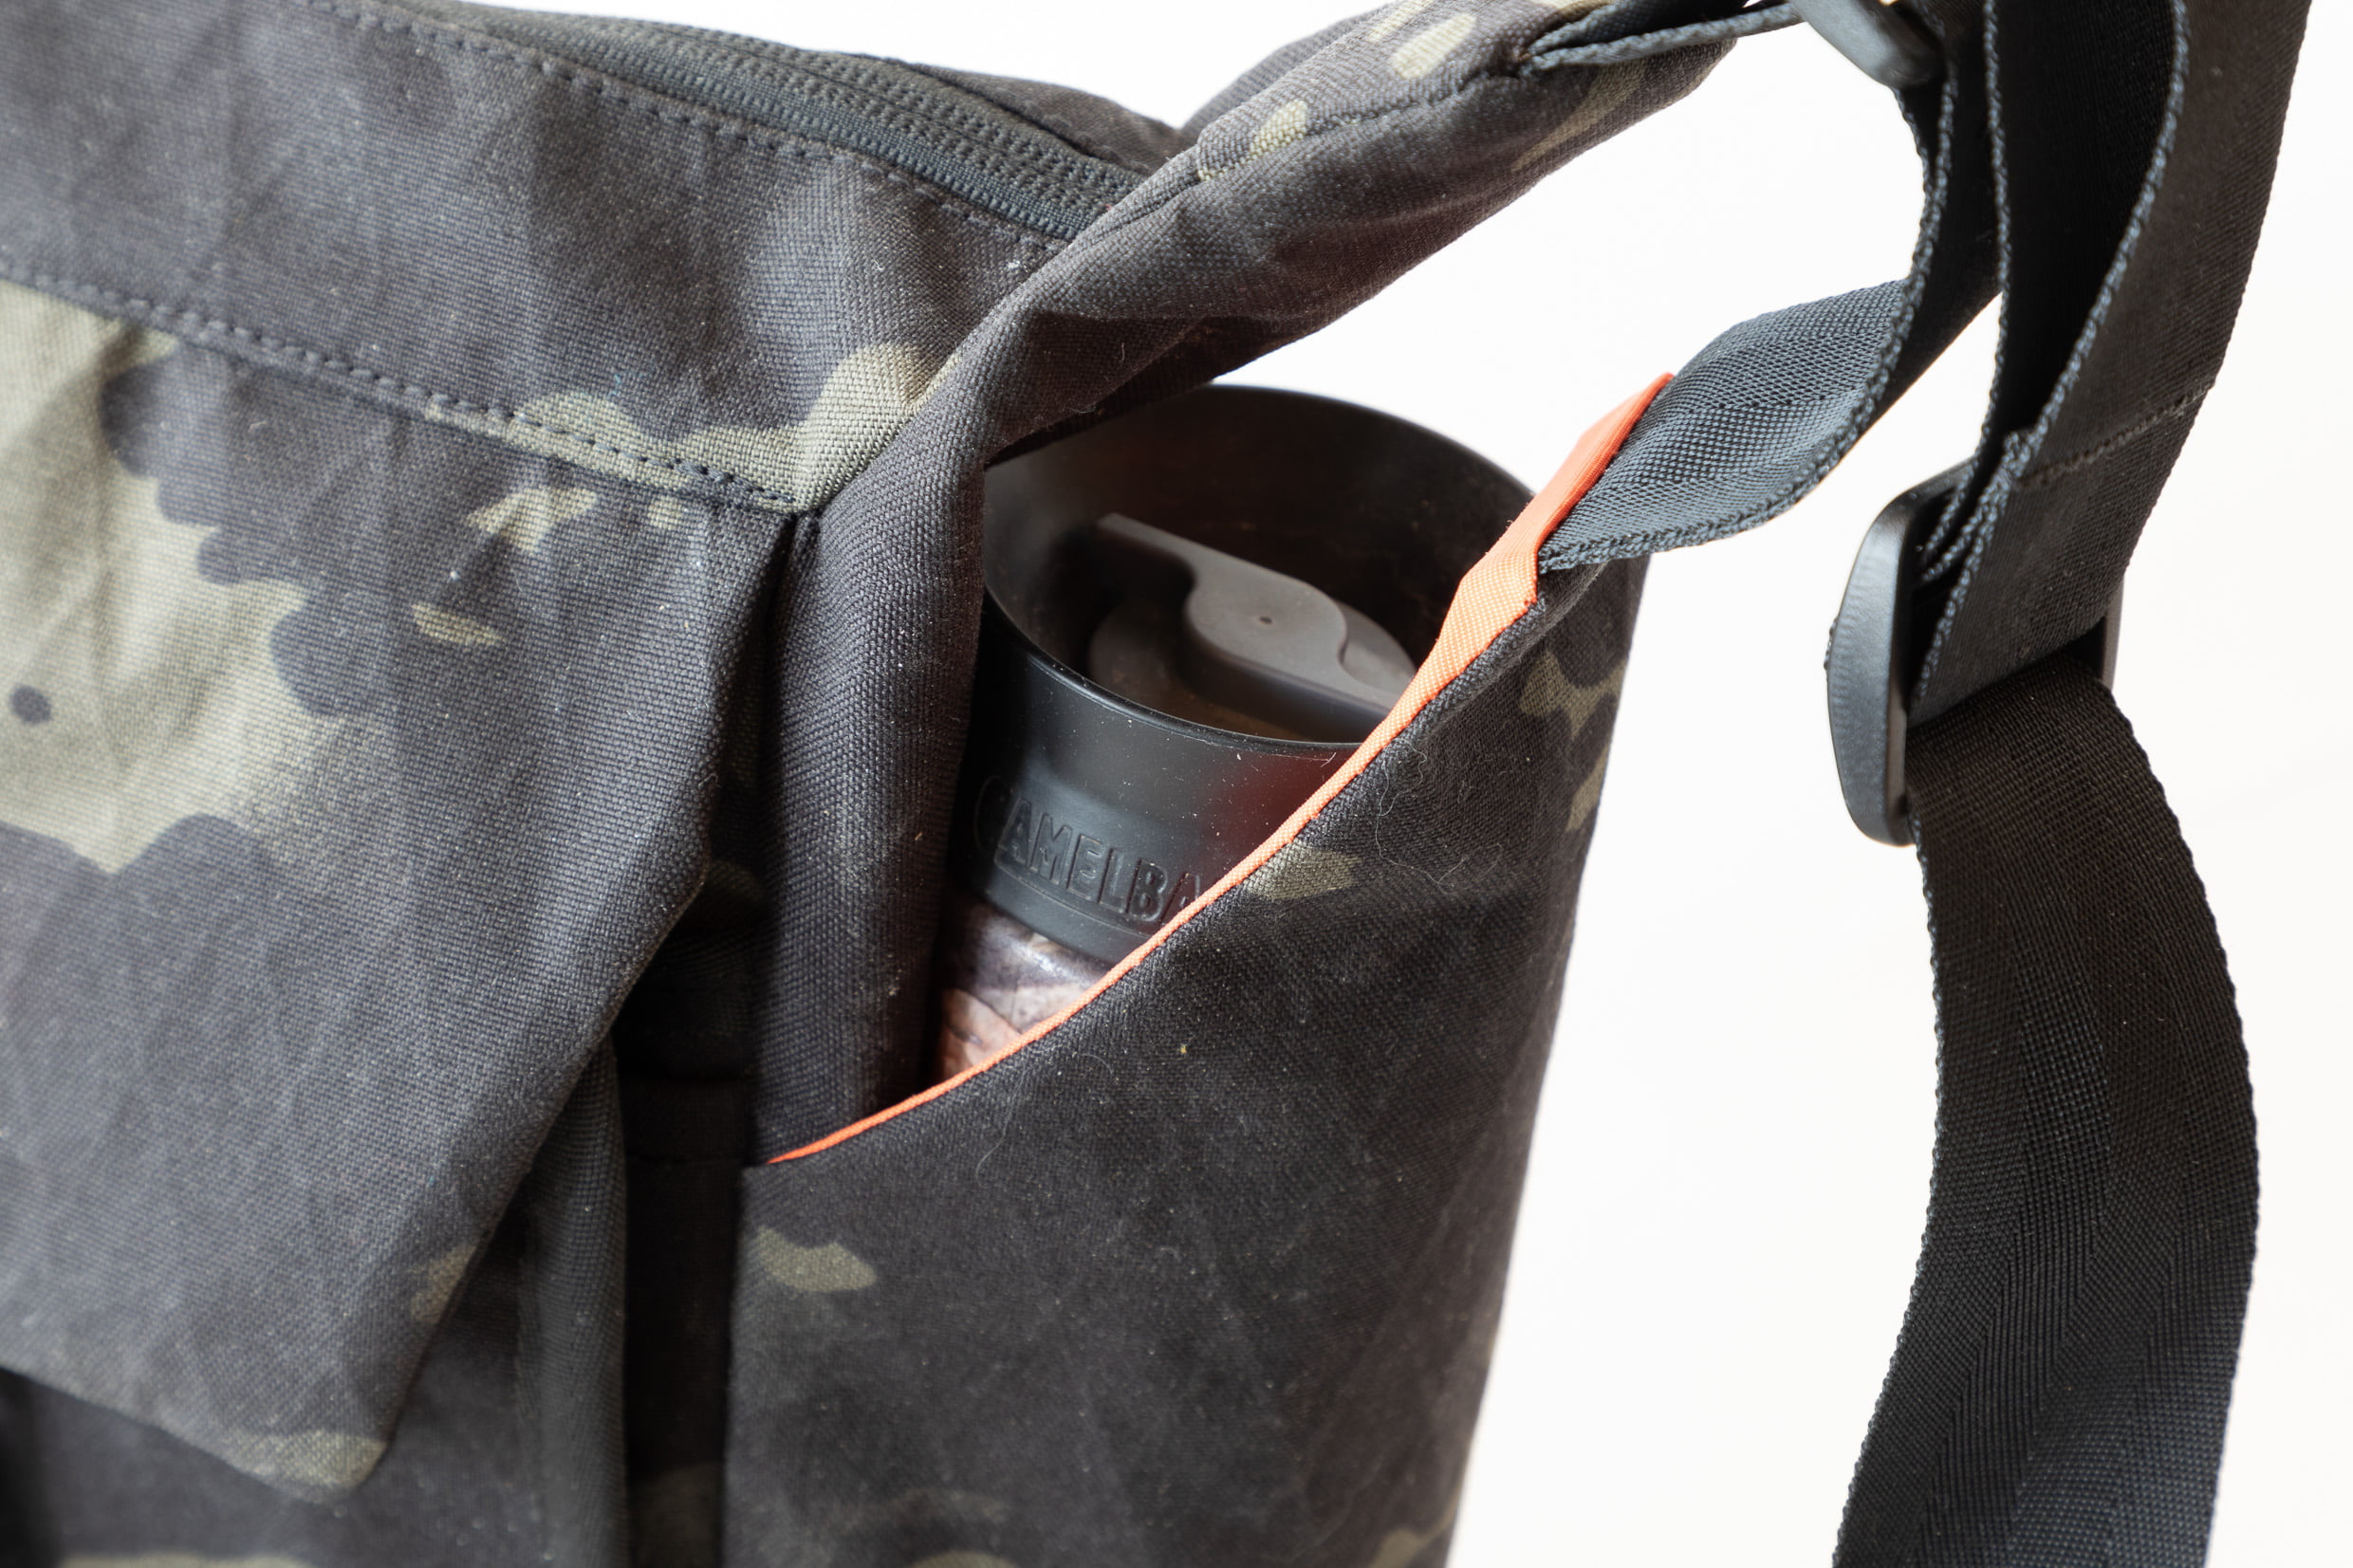 camera backpack,travel gear,travel backpack,compact rucksack